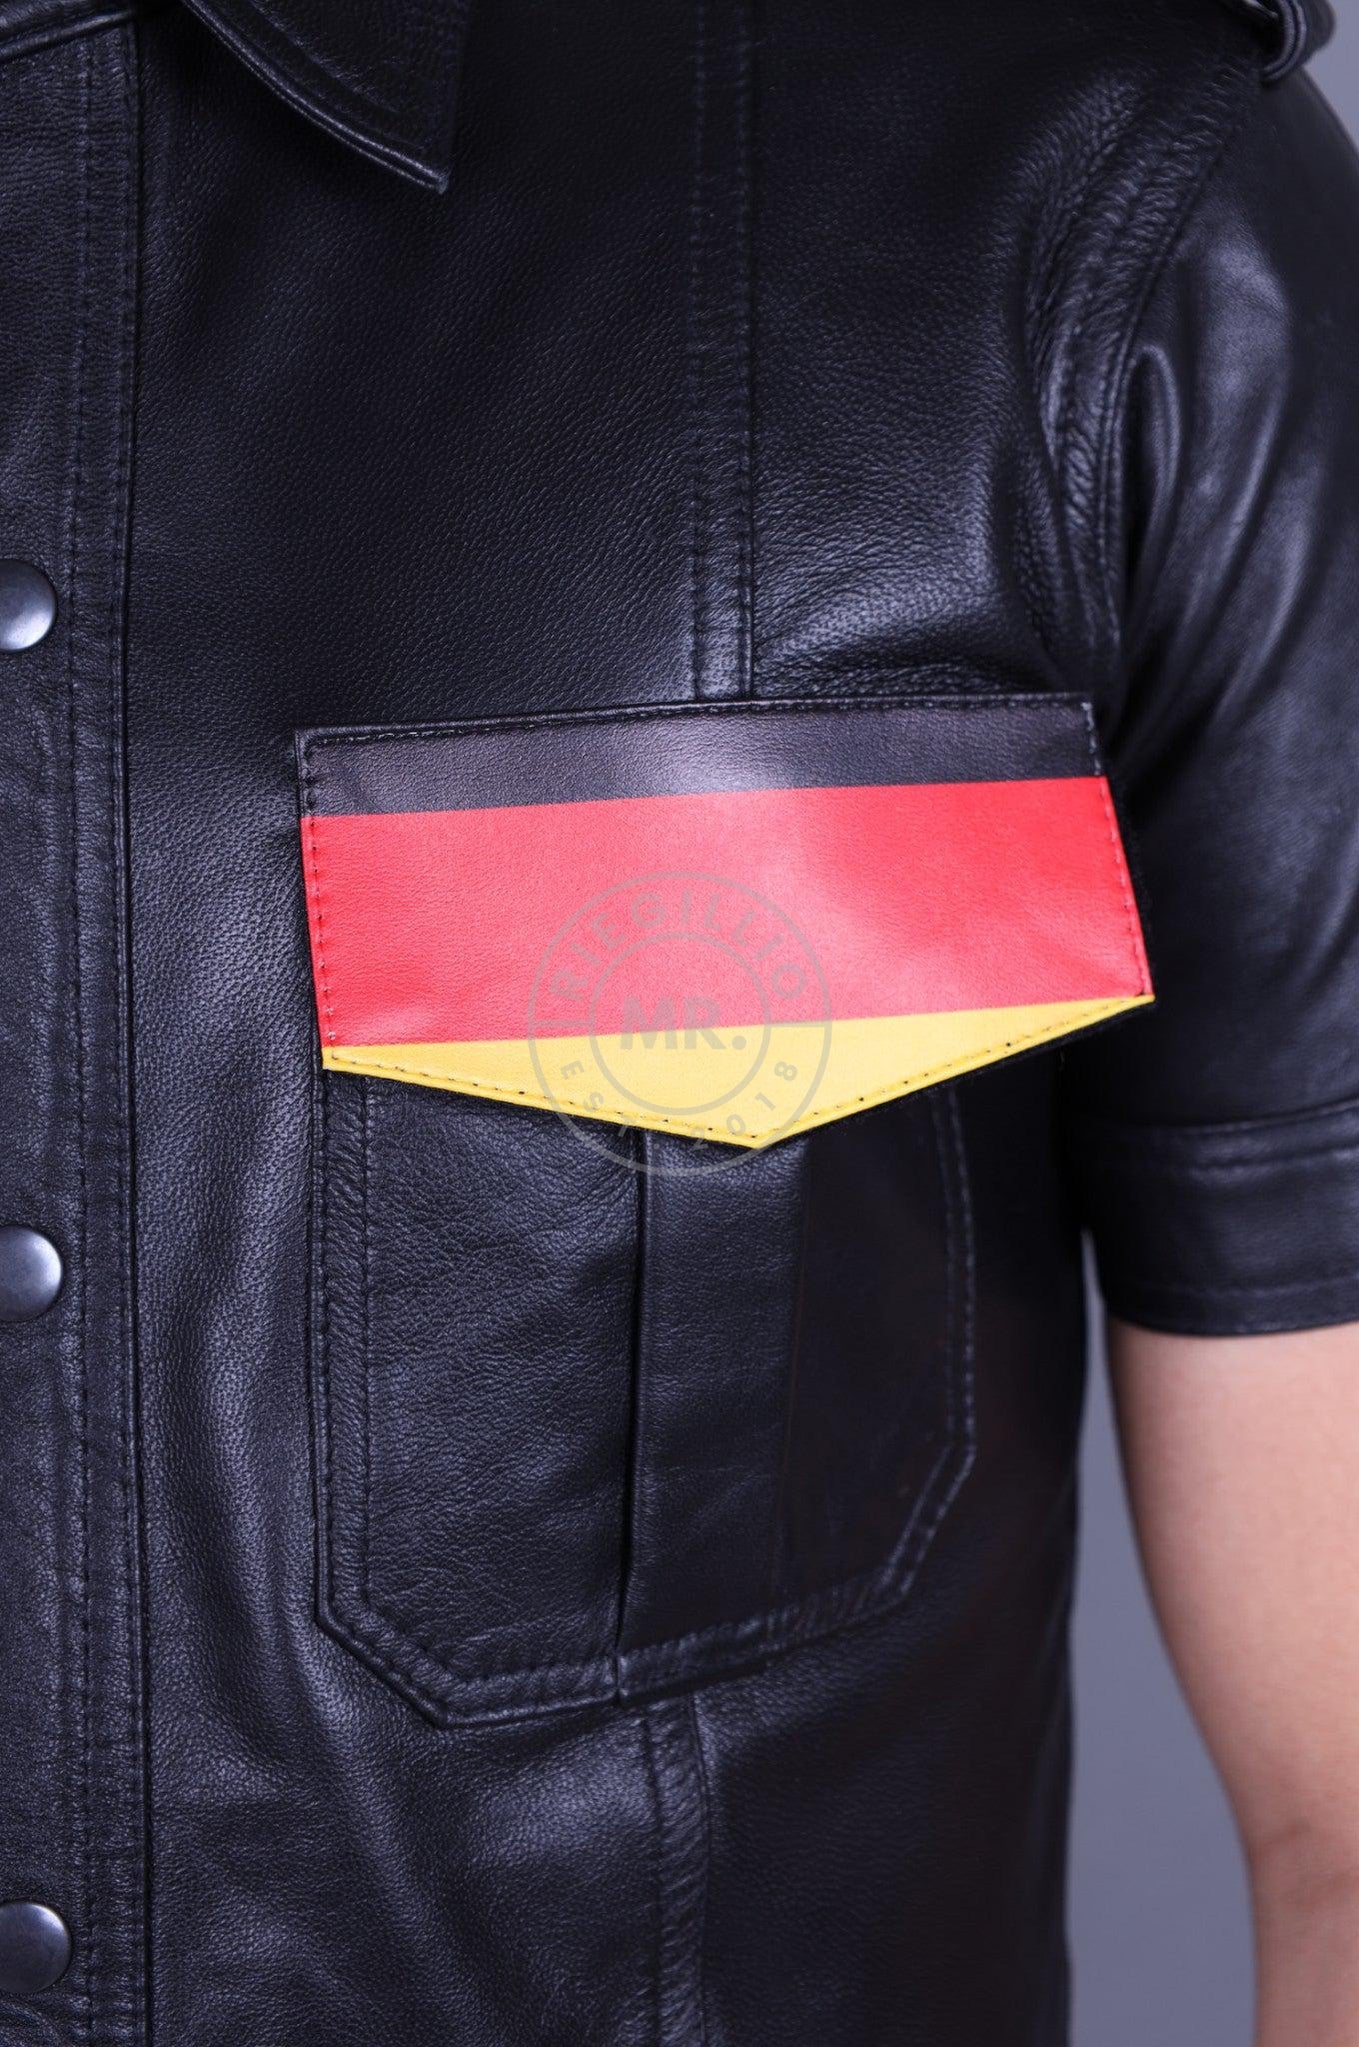 Velcro Patch - German Flag-at MR. Riegillio